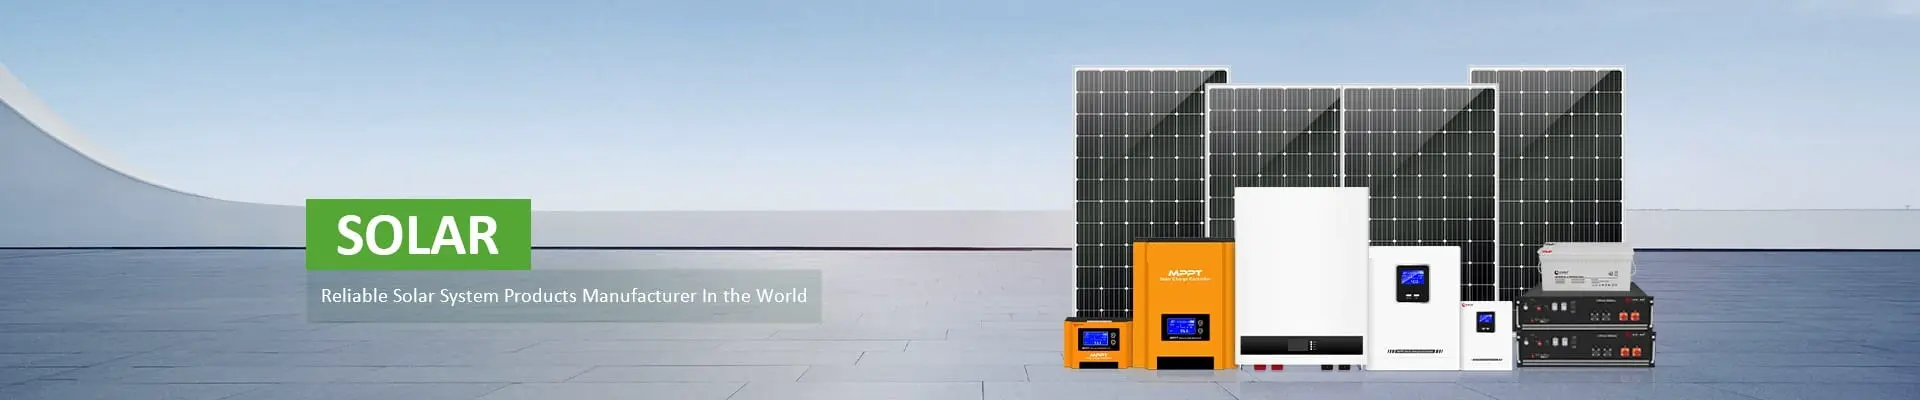 PVMars solar power storage product